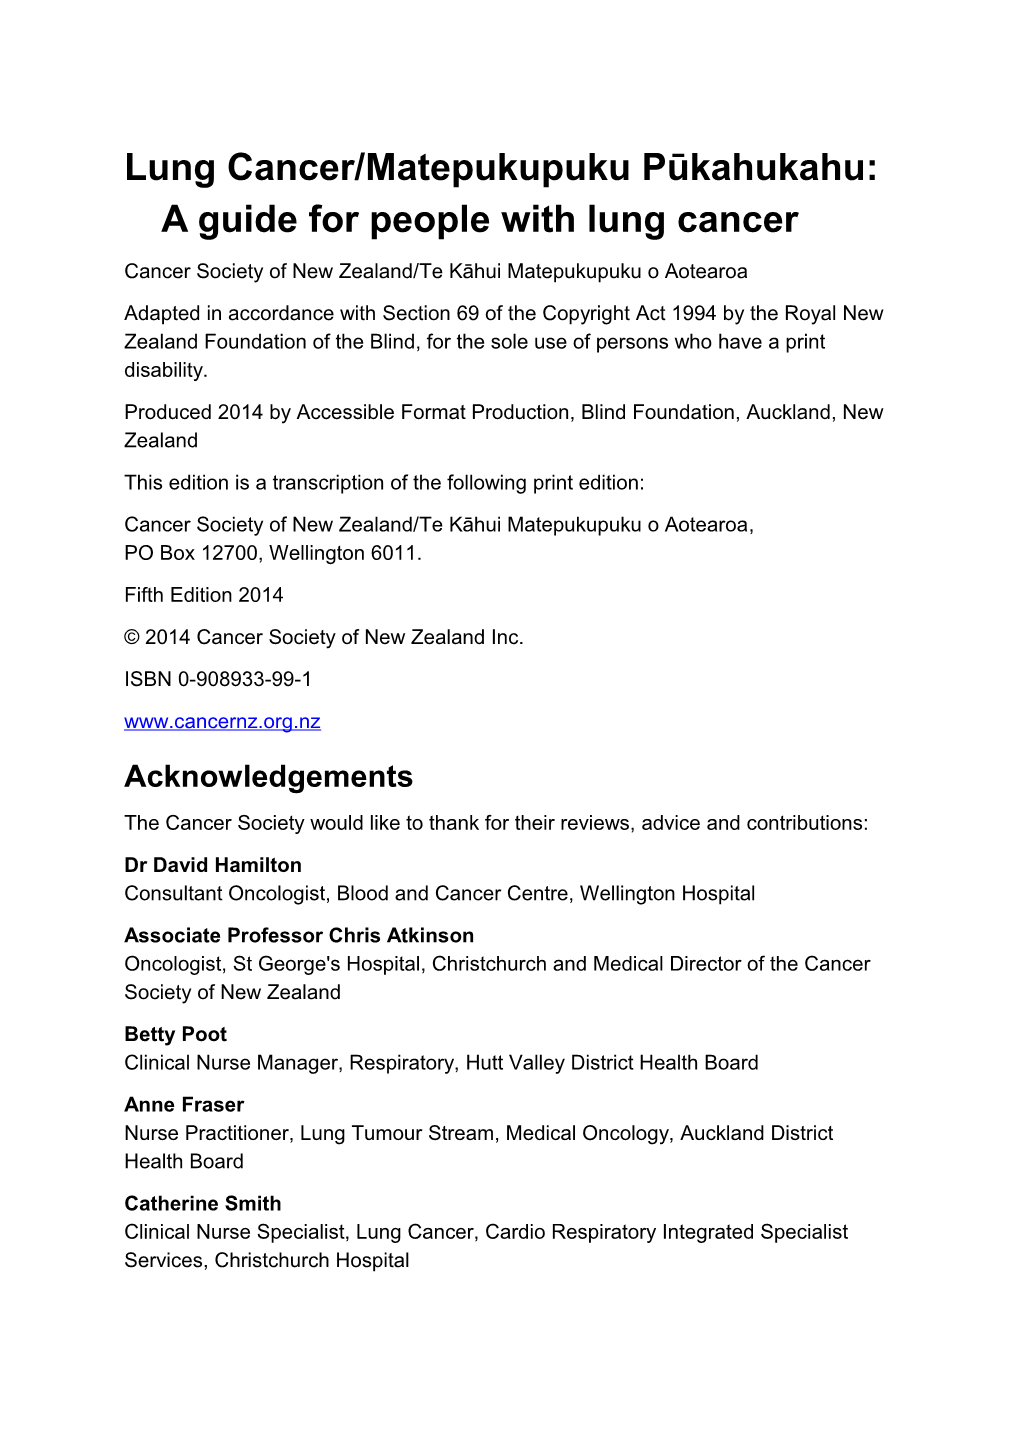 Lung Cancer/Matepukupuku Pūkahukahu: a Guide for People with Lung Cancer